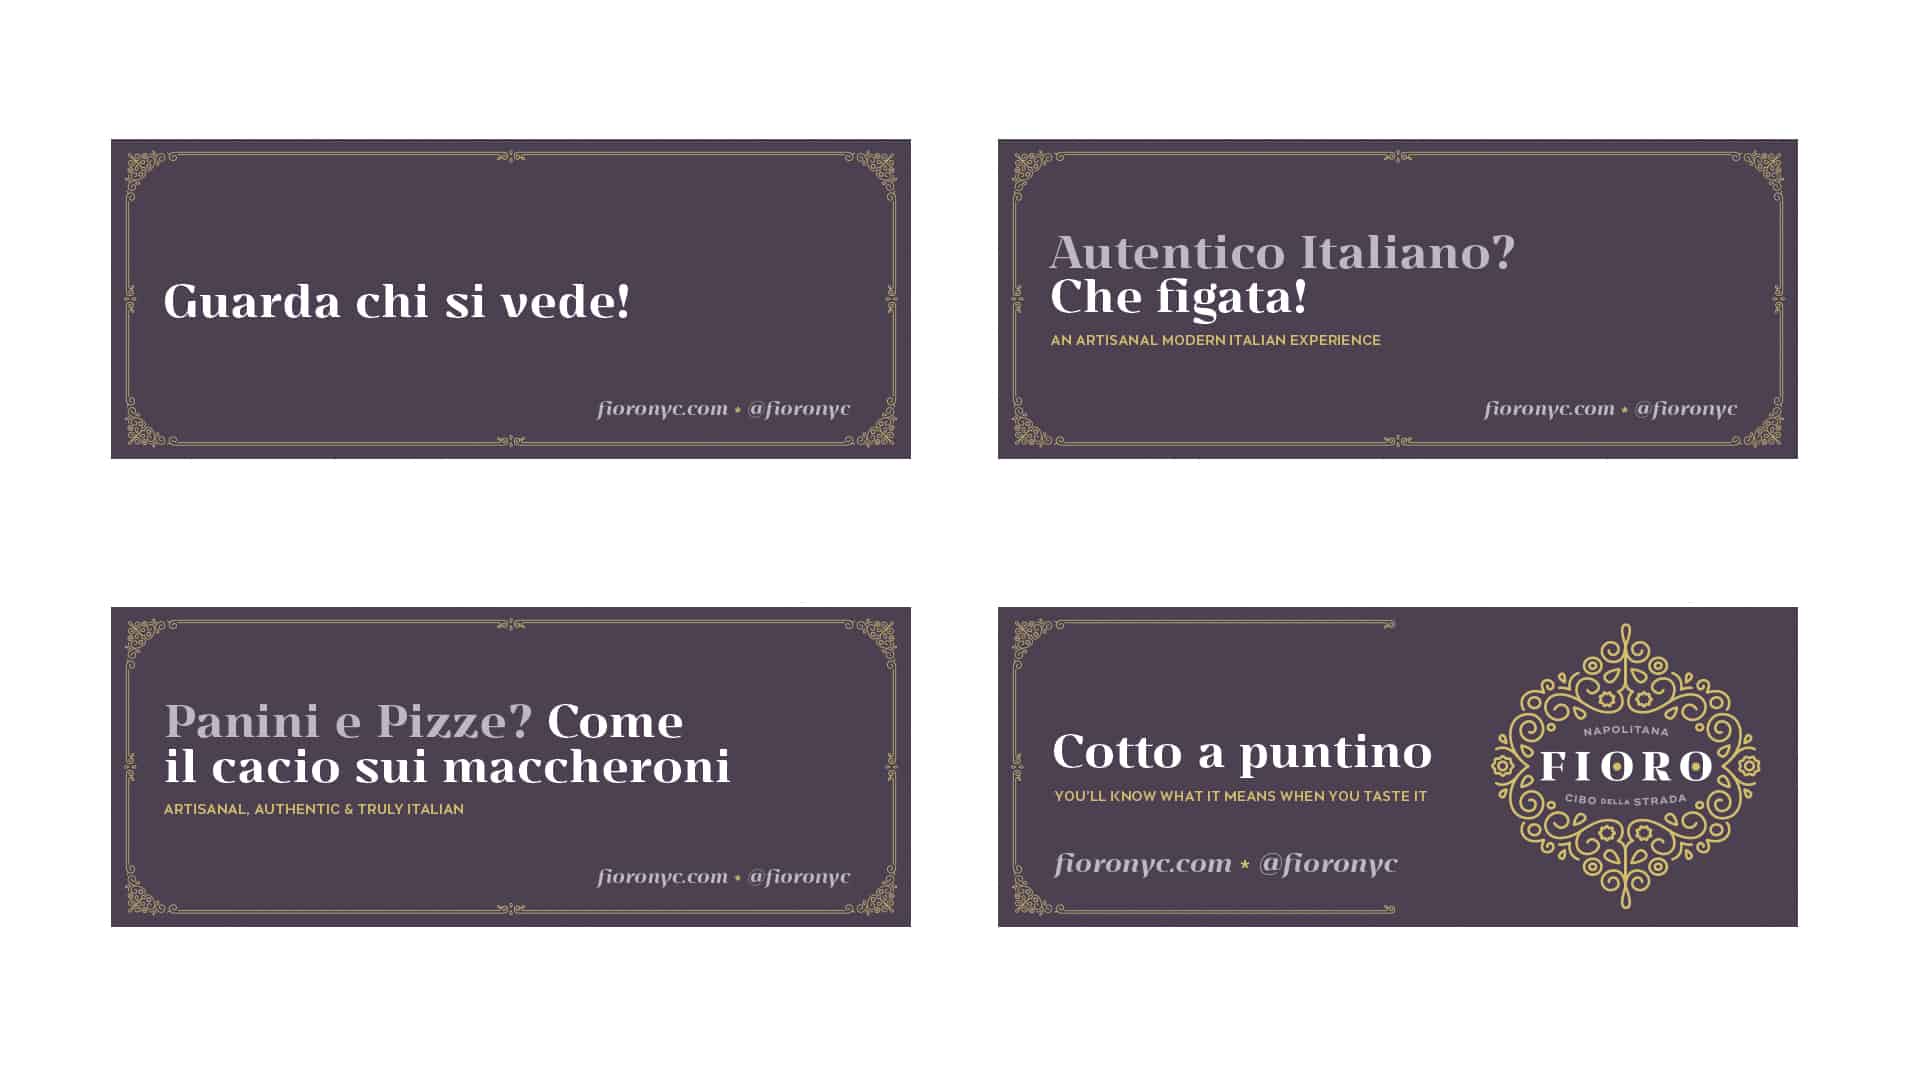 Fioro italian fast casual restaurant concept development and branding